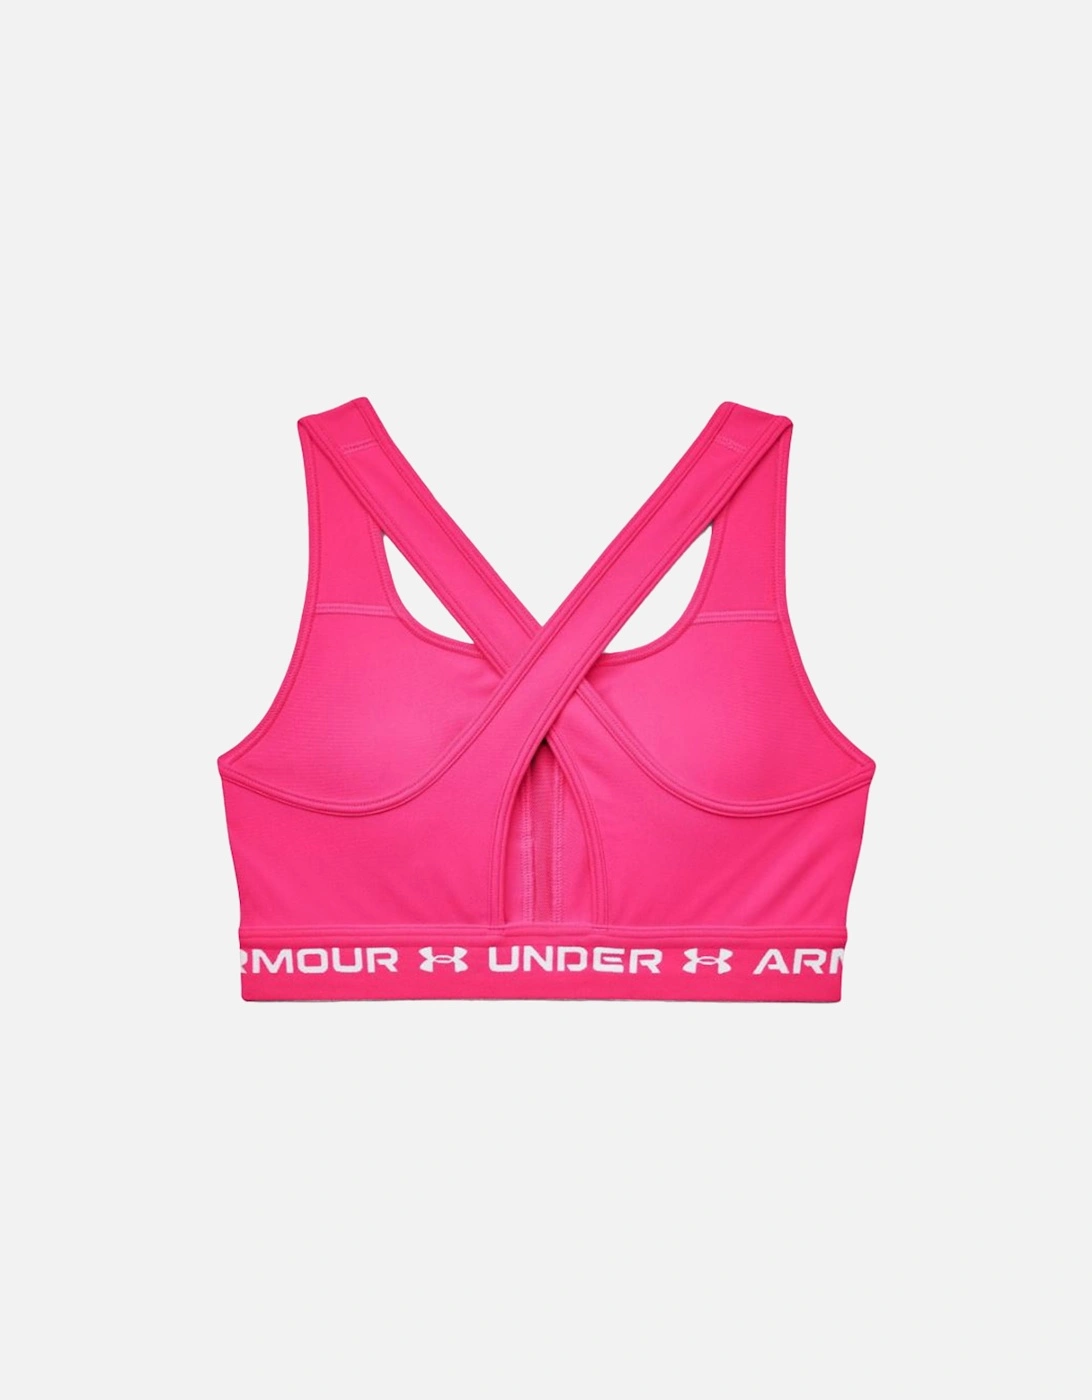 Womens Cross Back Sports Bra (Pink)